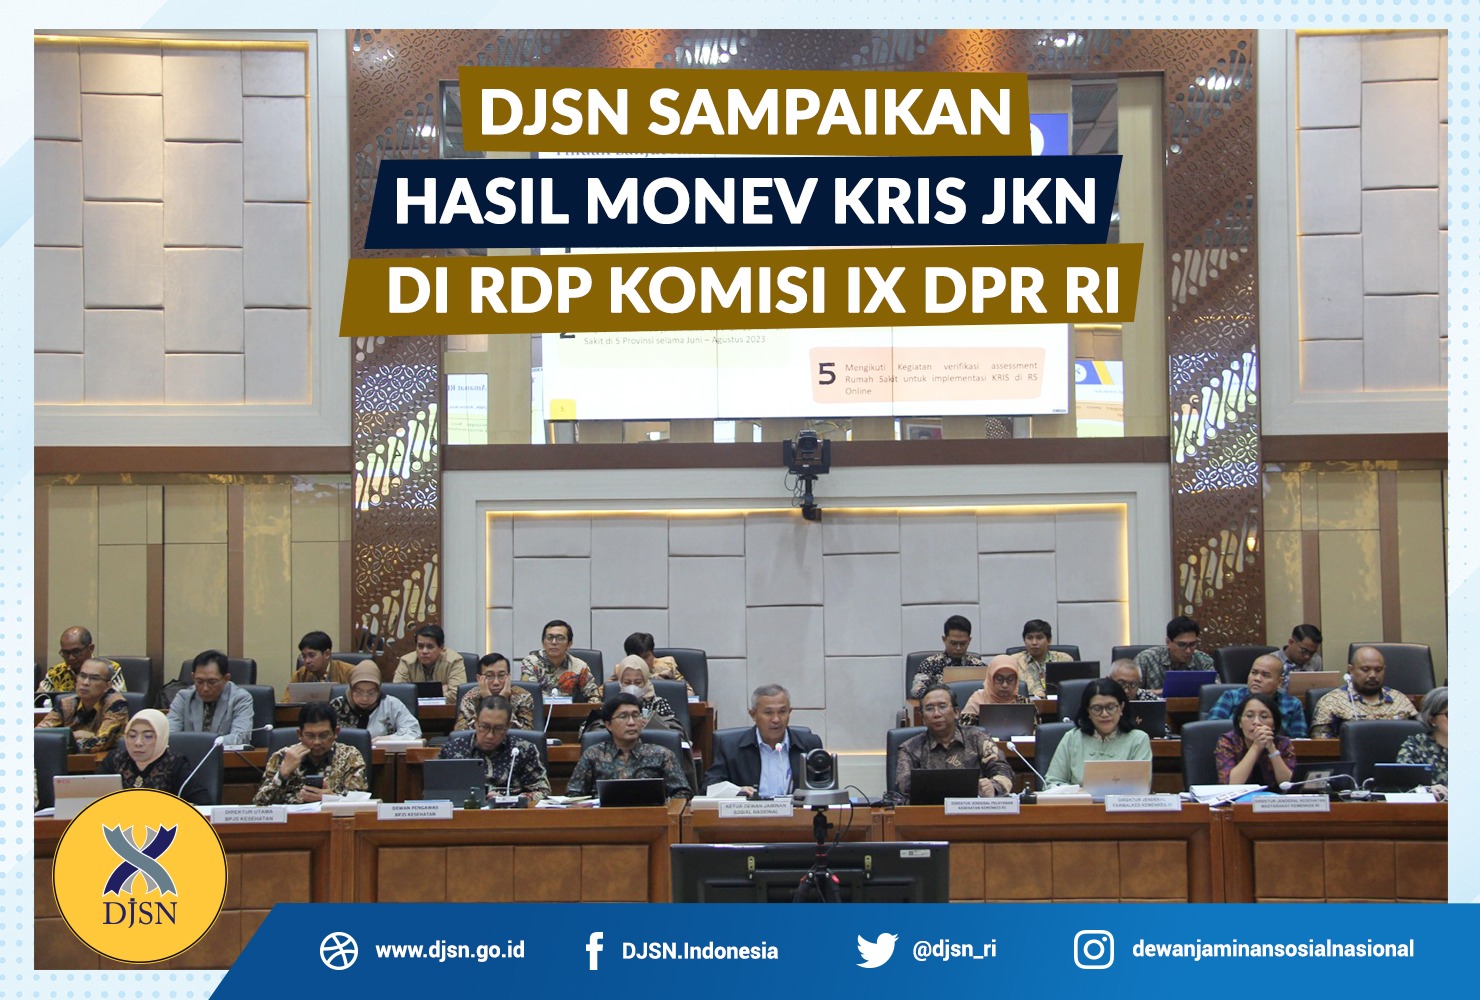 DJSN Sampaikan Hasil Monev KRIS JKN di RDP Komisi IX DPR RI